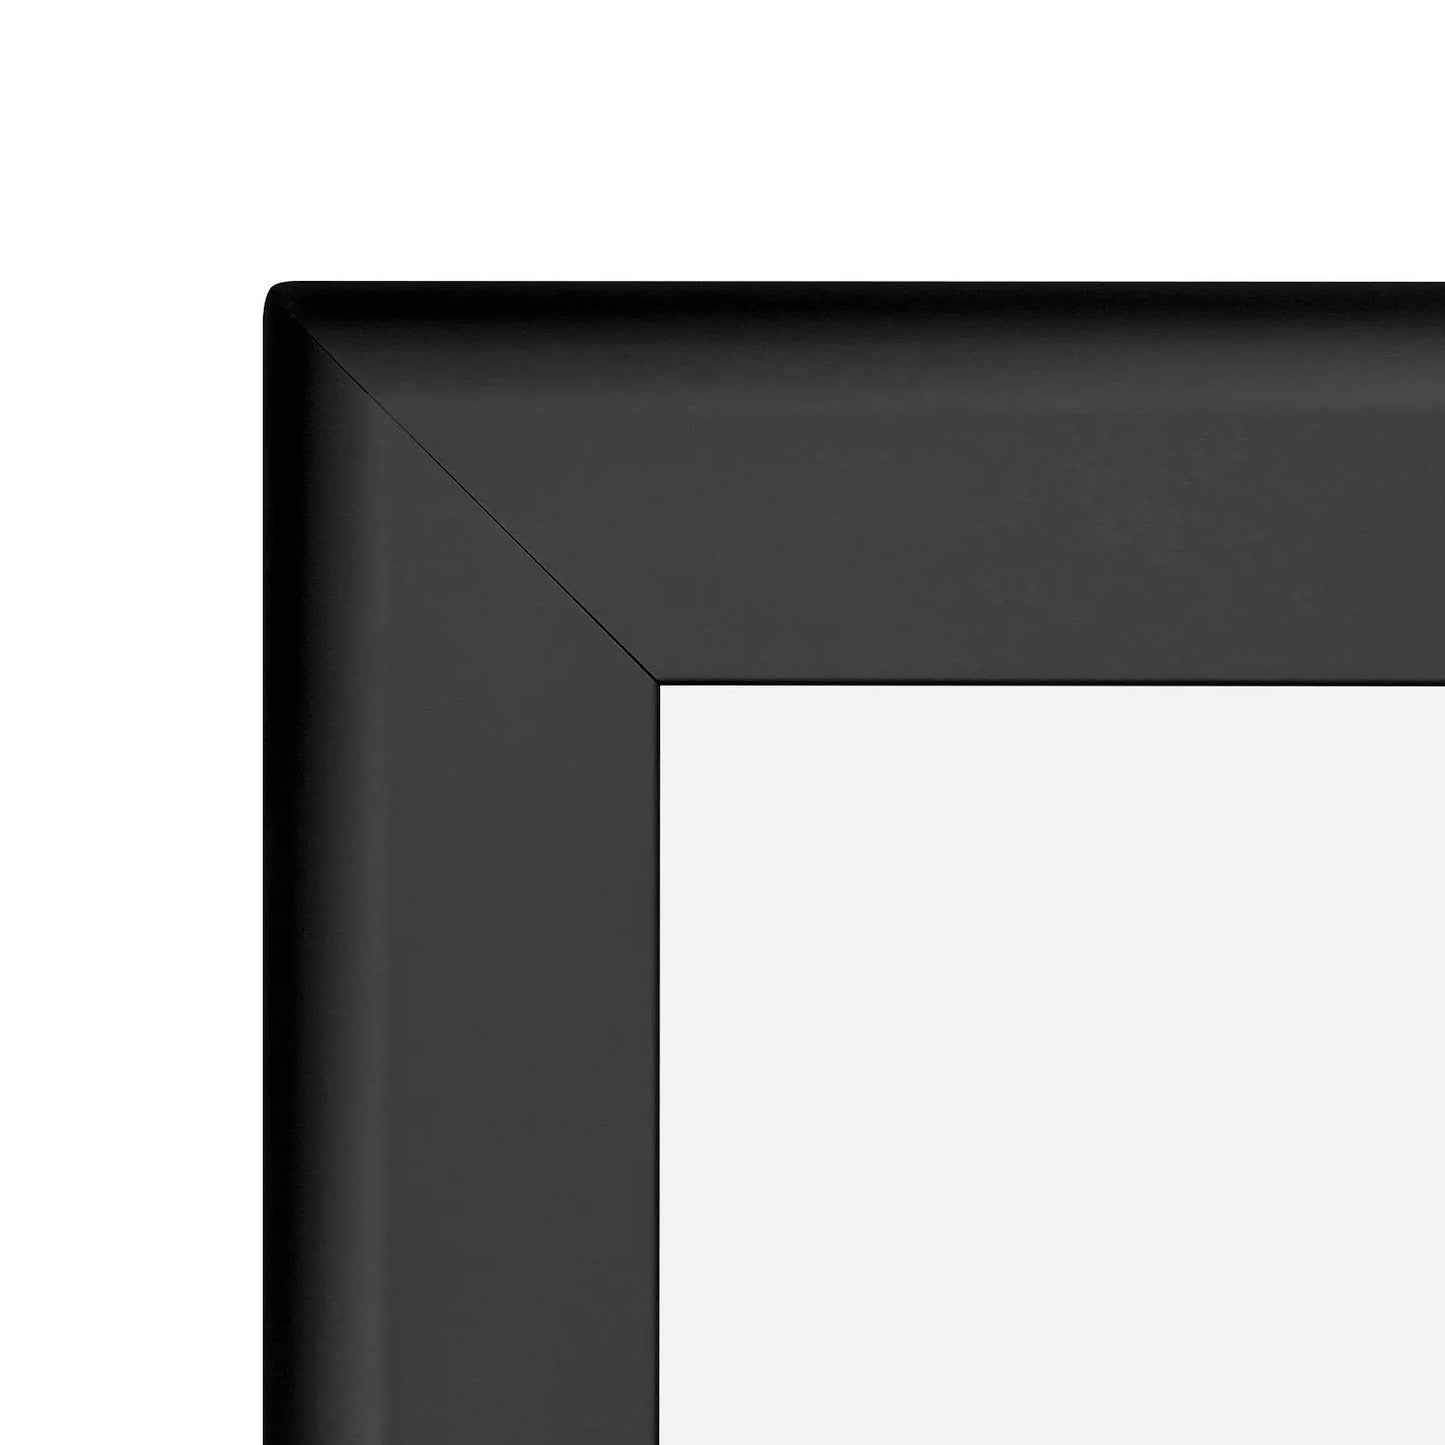 24x36 Black SnapeZo® Snap Frame - 1.7" Profile - Snap Frames Direct